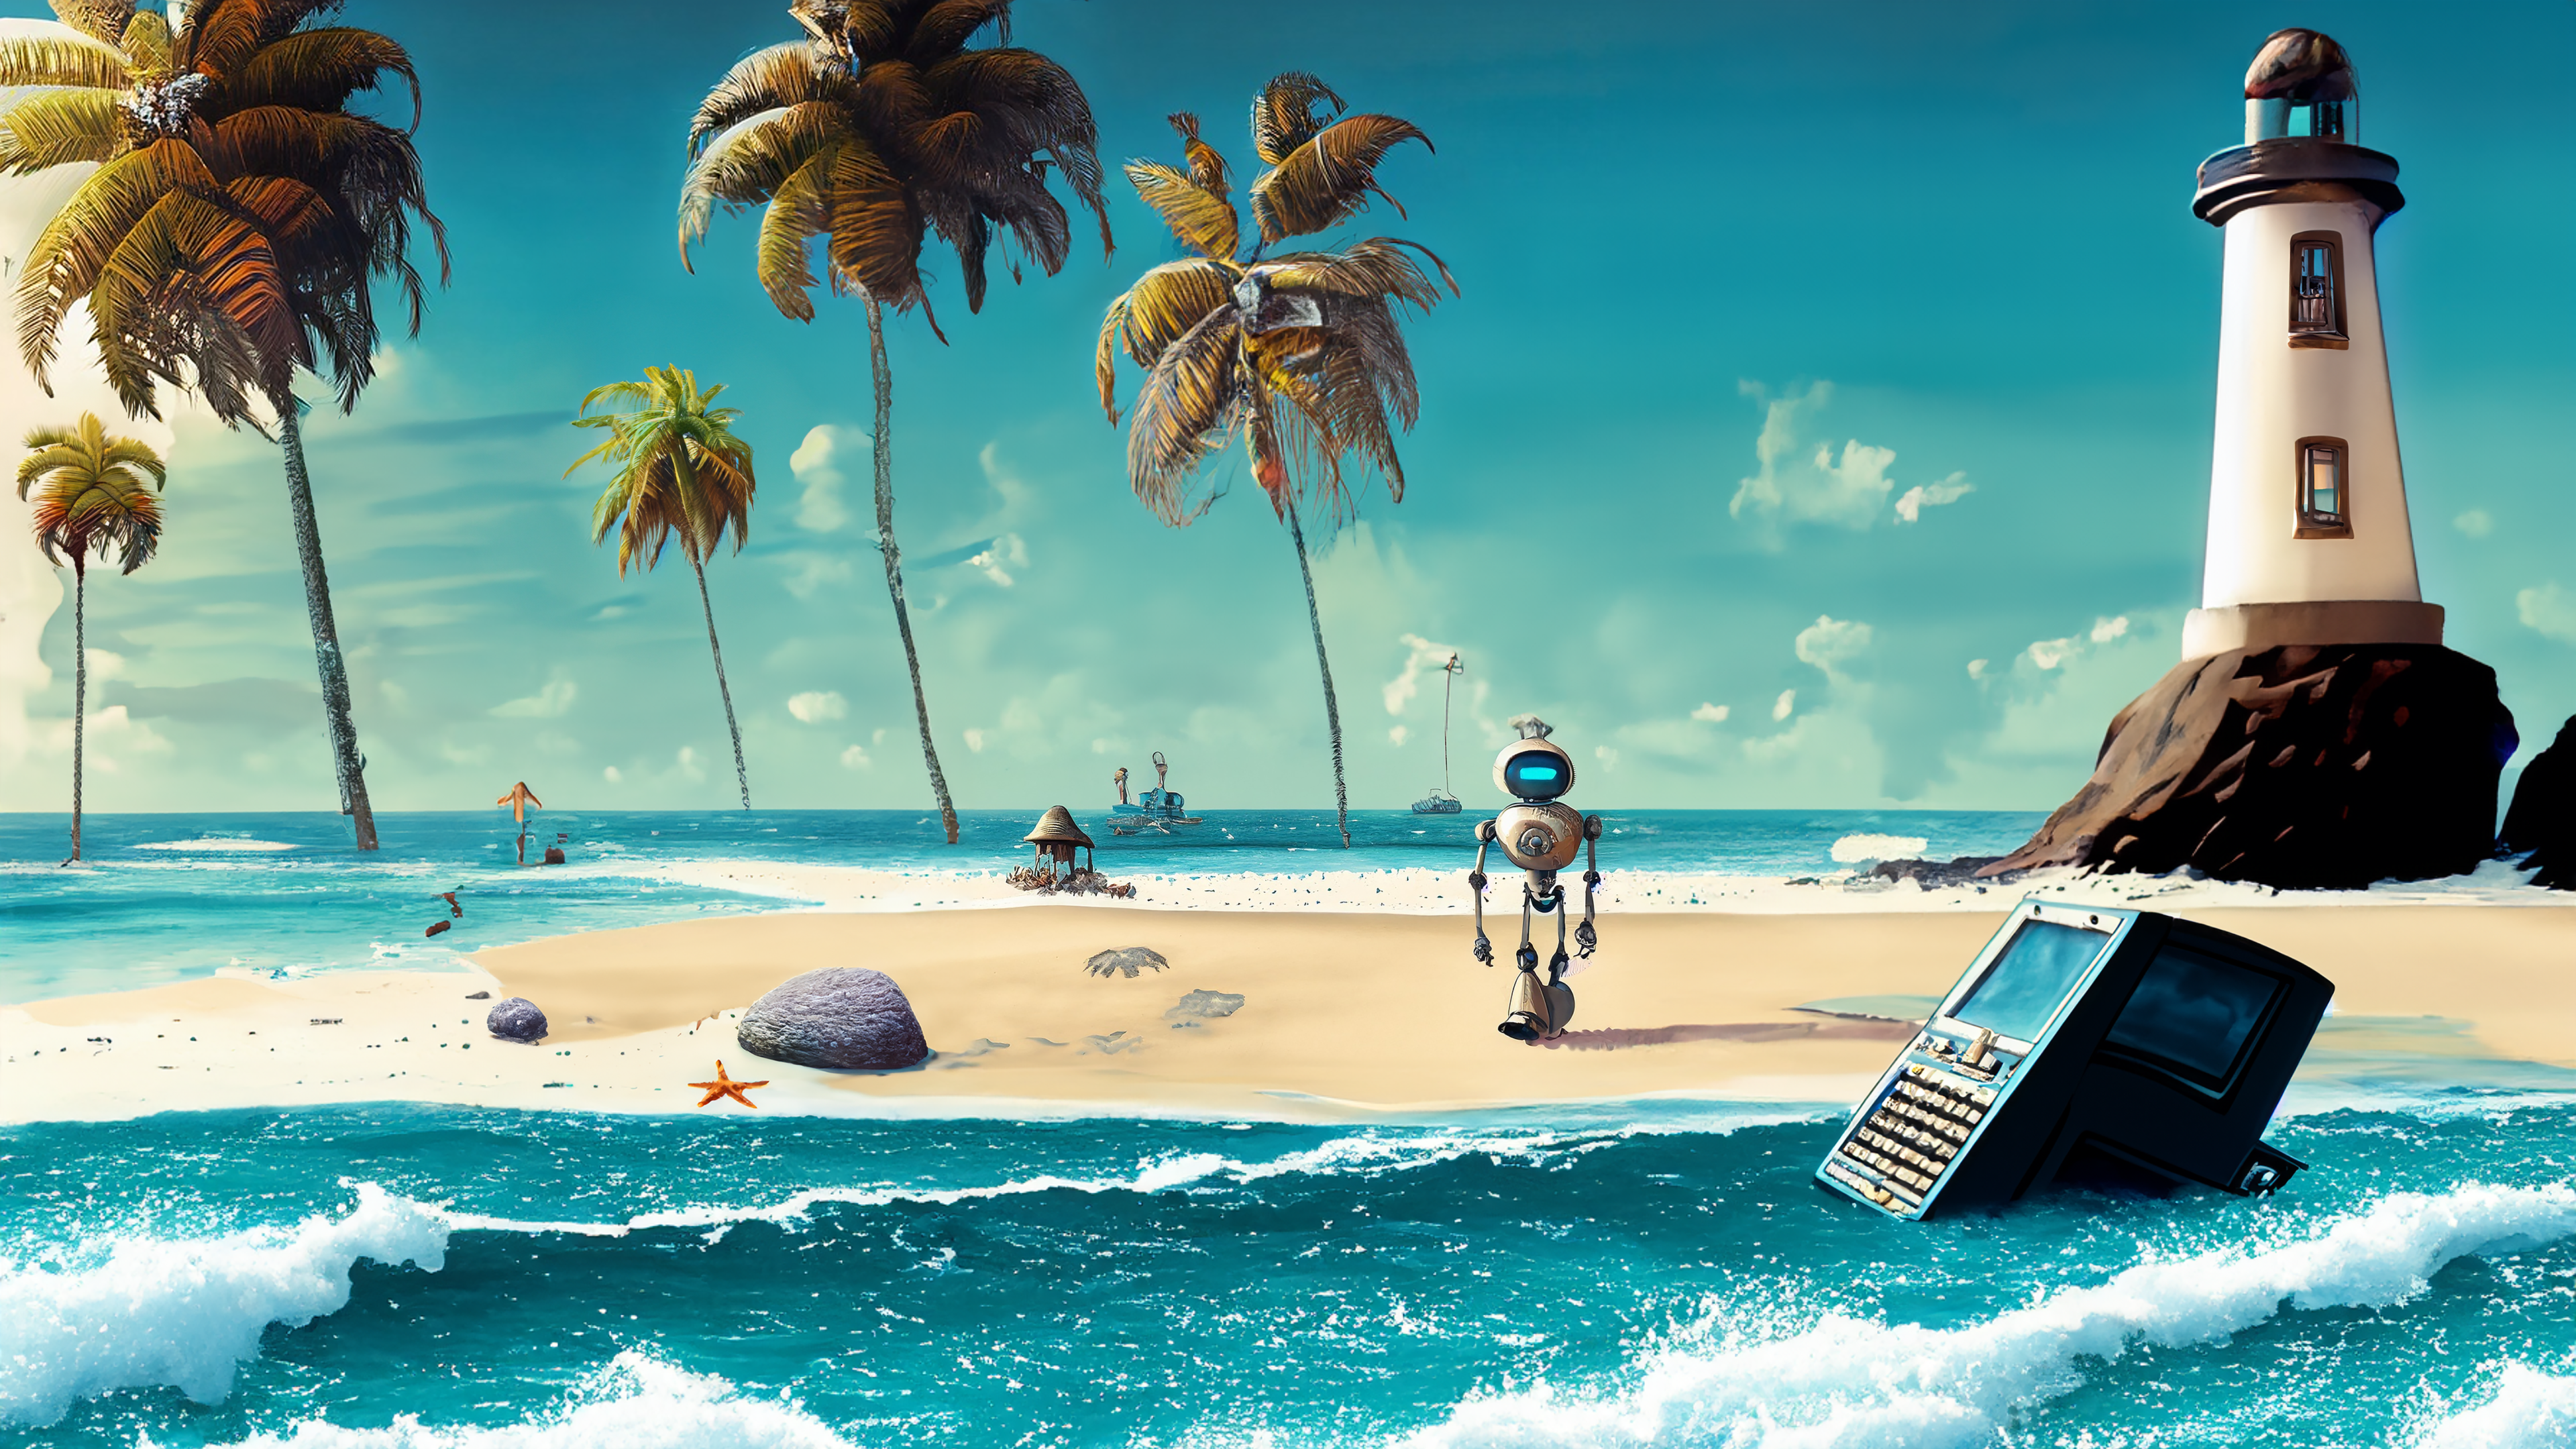 Sun, Sand and Robots - 3840px x 2160px